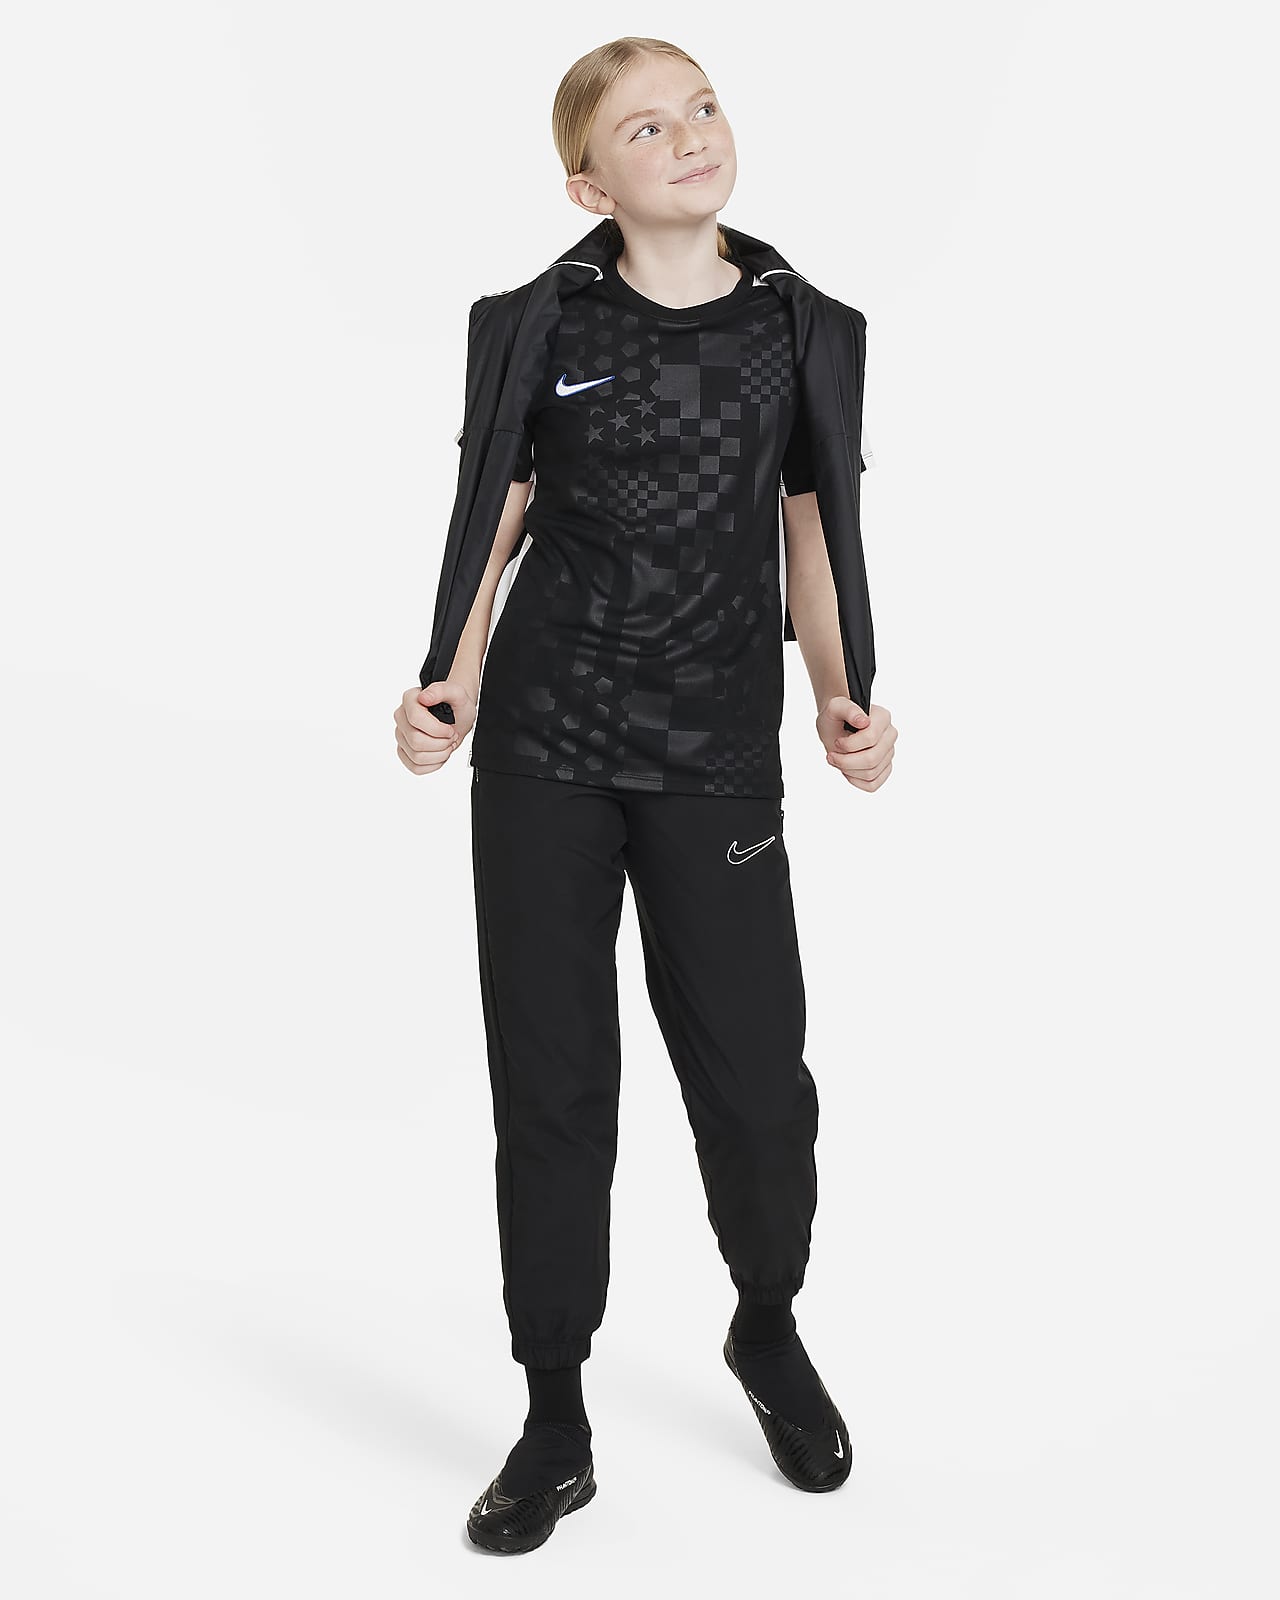 Soccer Kids\' Big Dri-FIT Short-Sleeve Nike Top. Academy